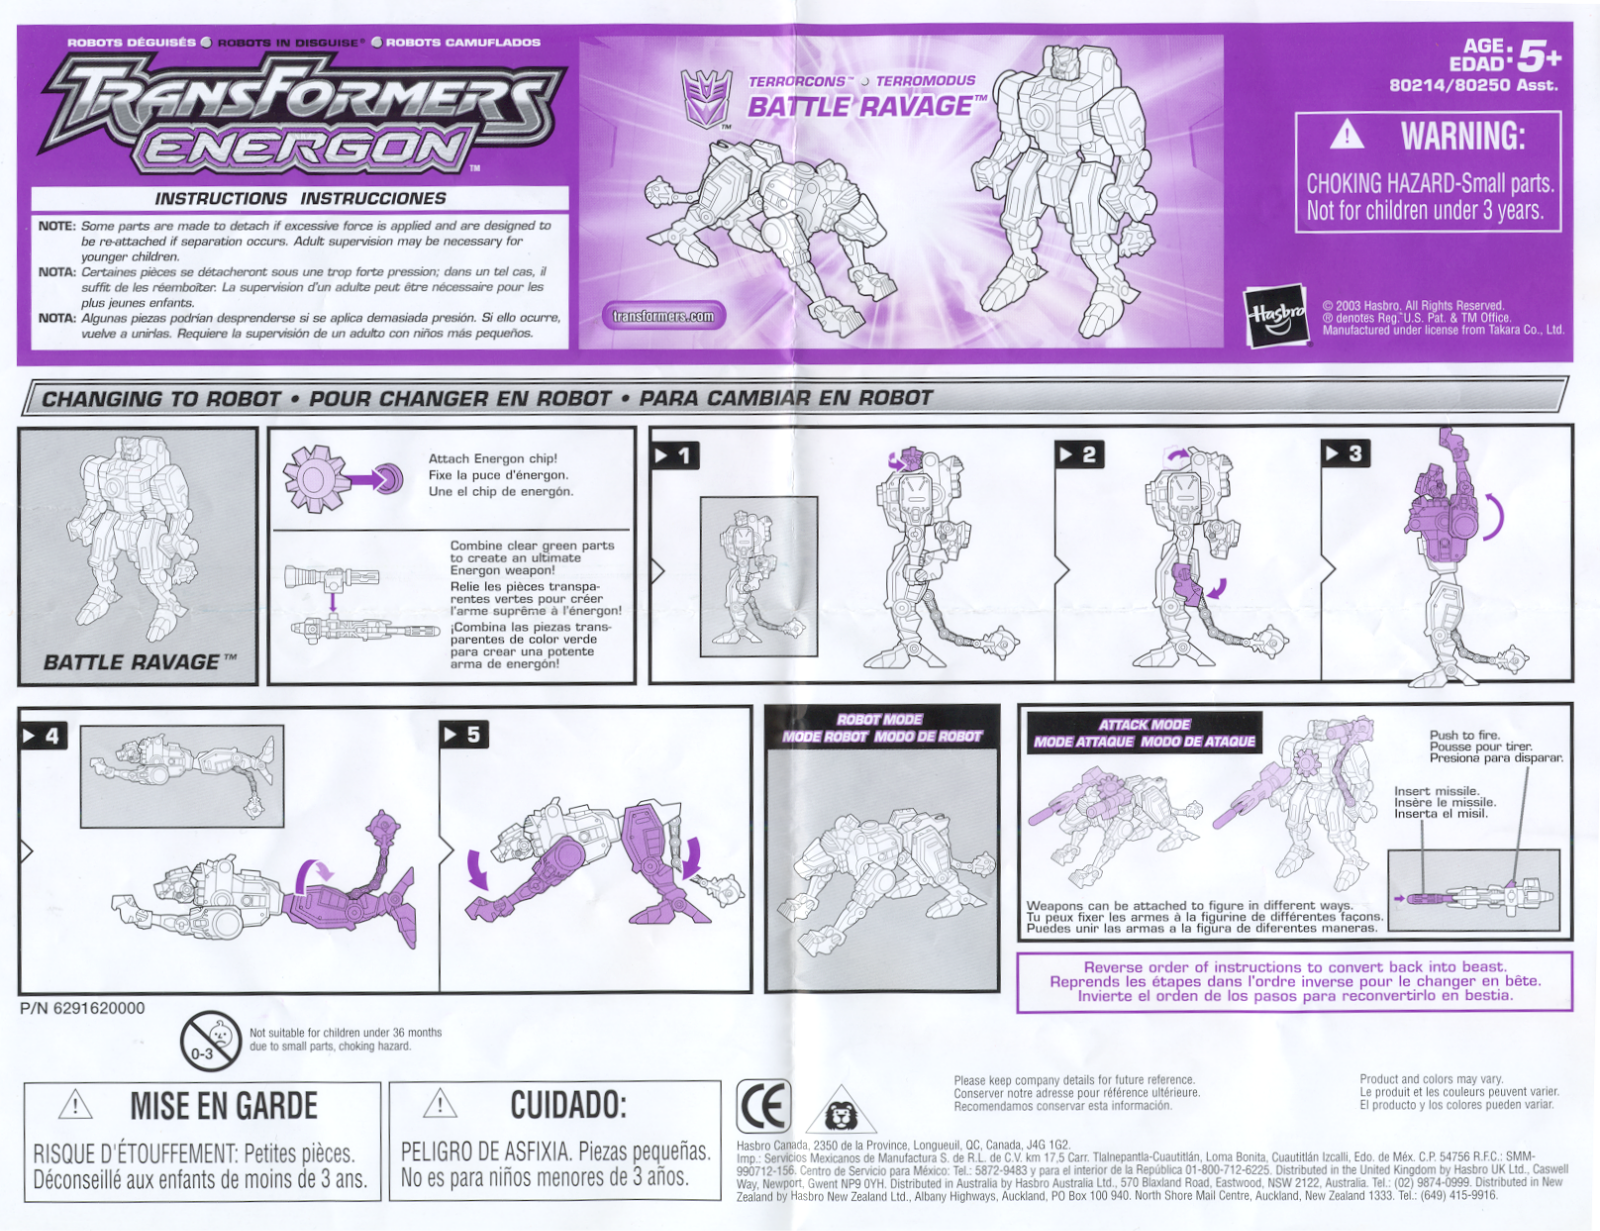 HASBRO Transformers Energon Battle Ravage User Manual